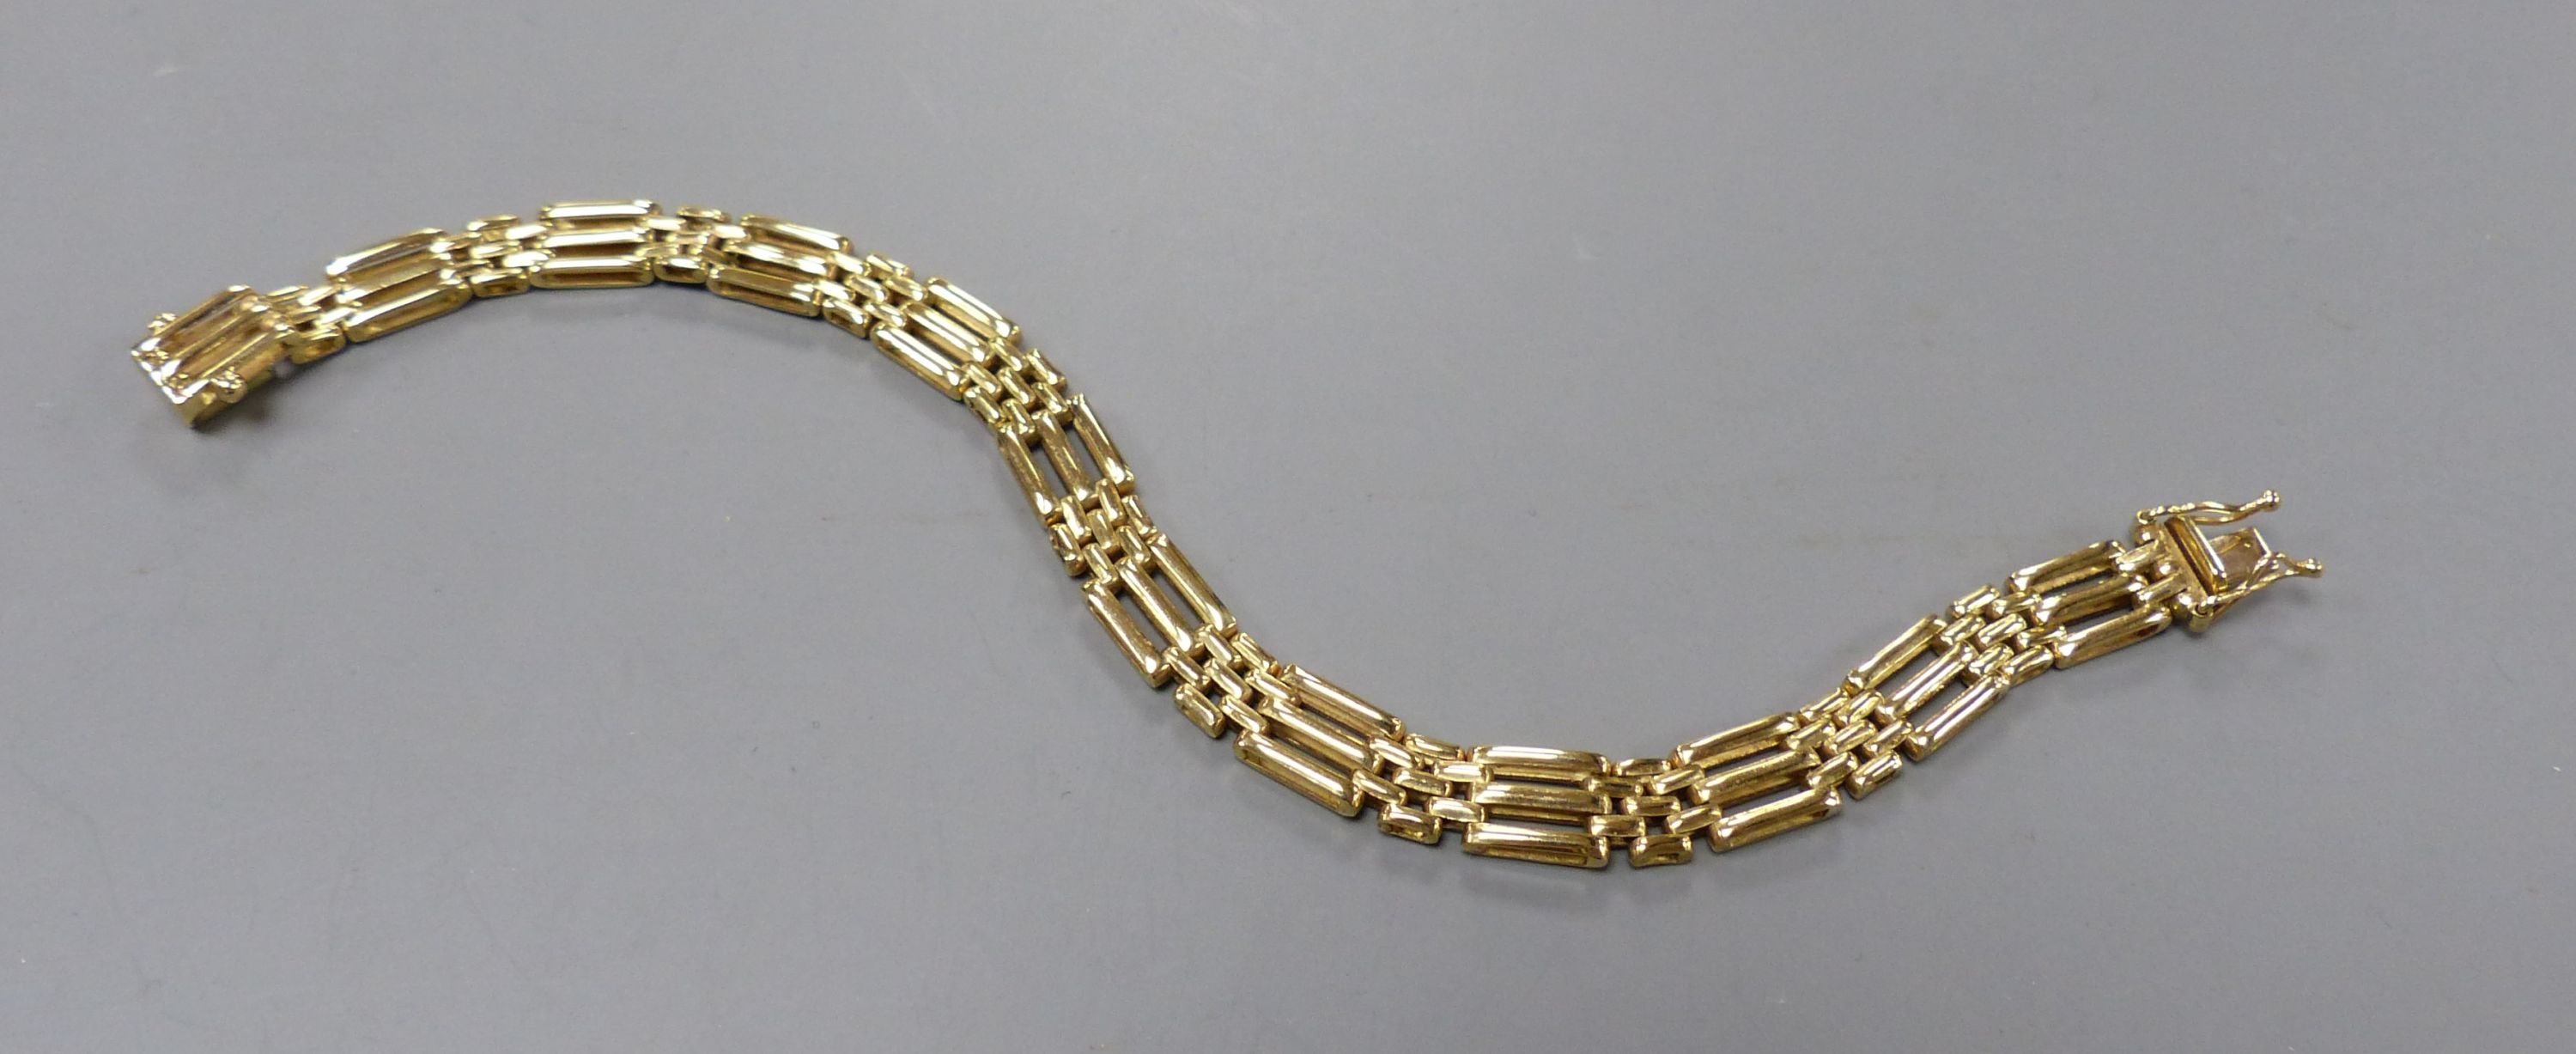 A 9ct yellow gold curb-link bracelet, 18.2cm, 10.9g